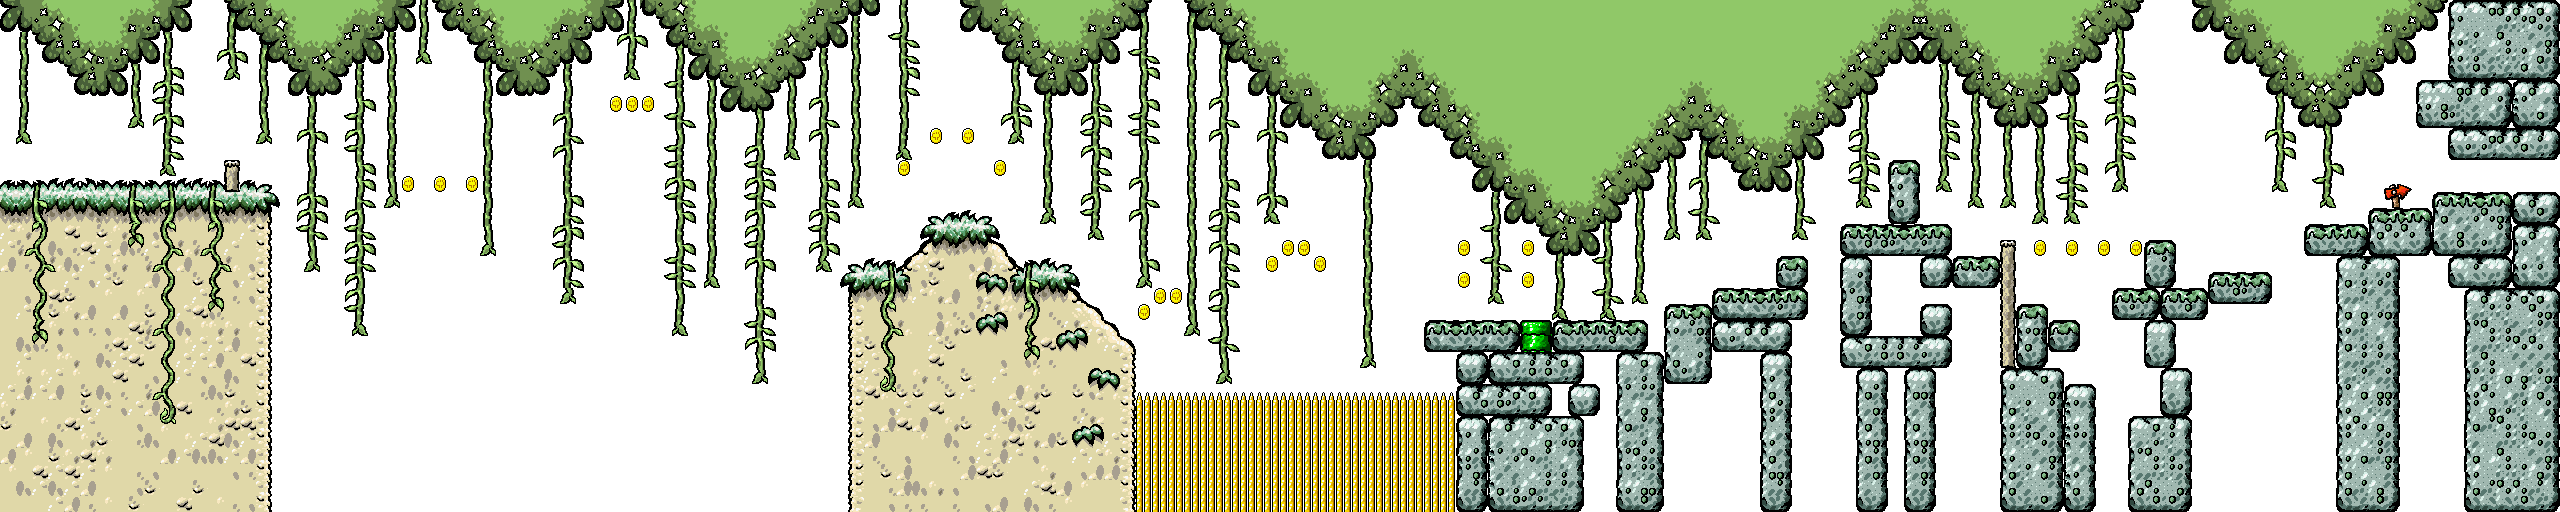 Super Mario World 2: Yoshi's Island - 3-5: Jammin' Through The Trees (2/3)